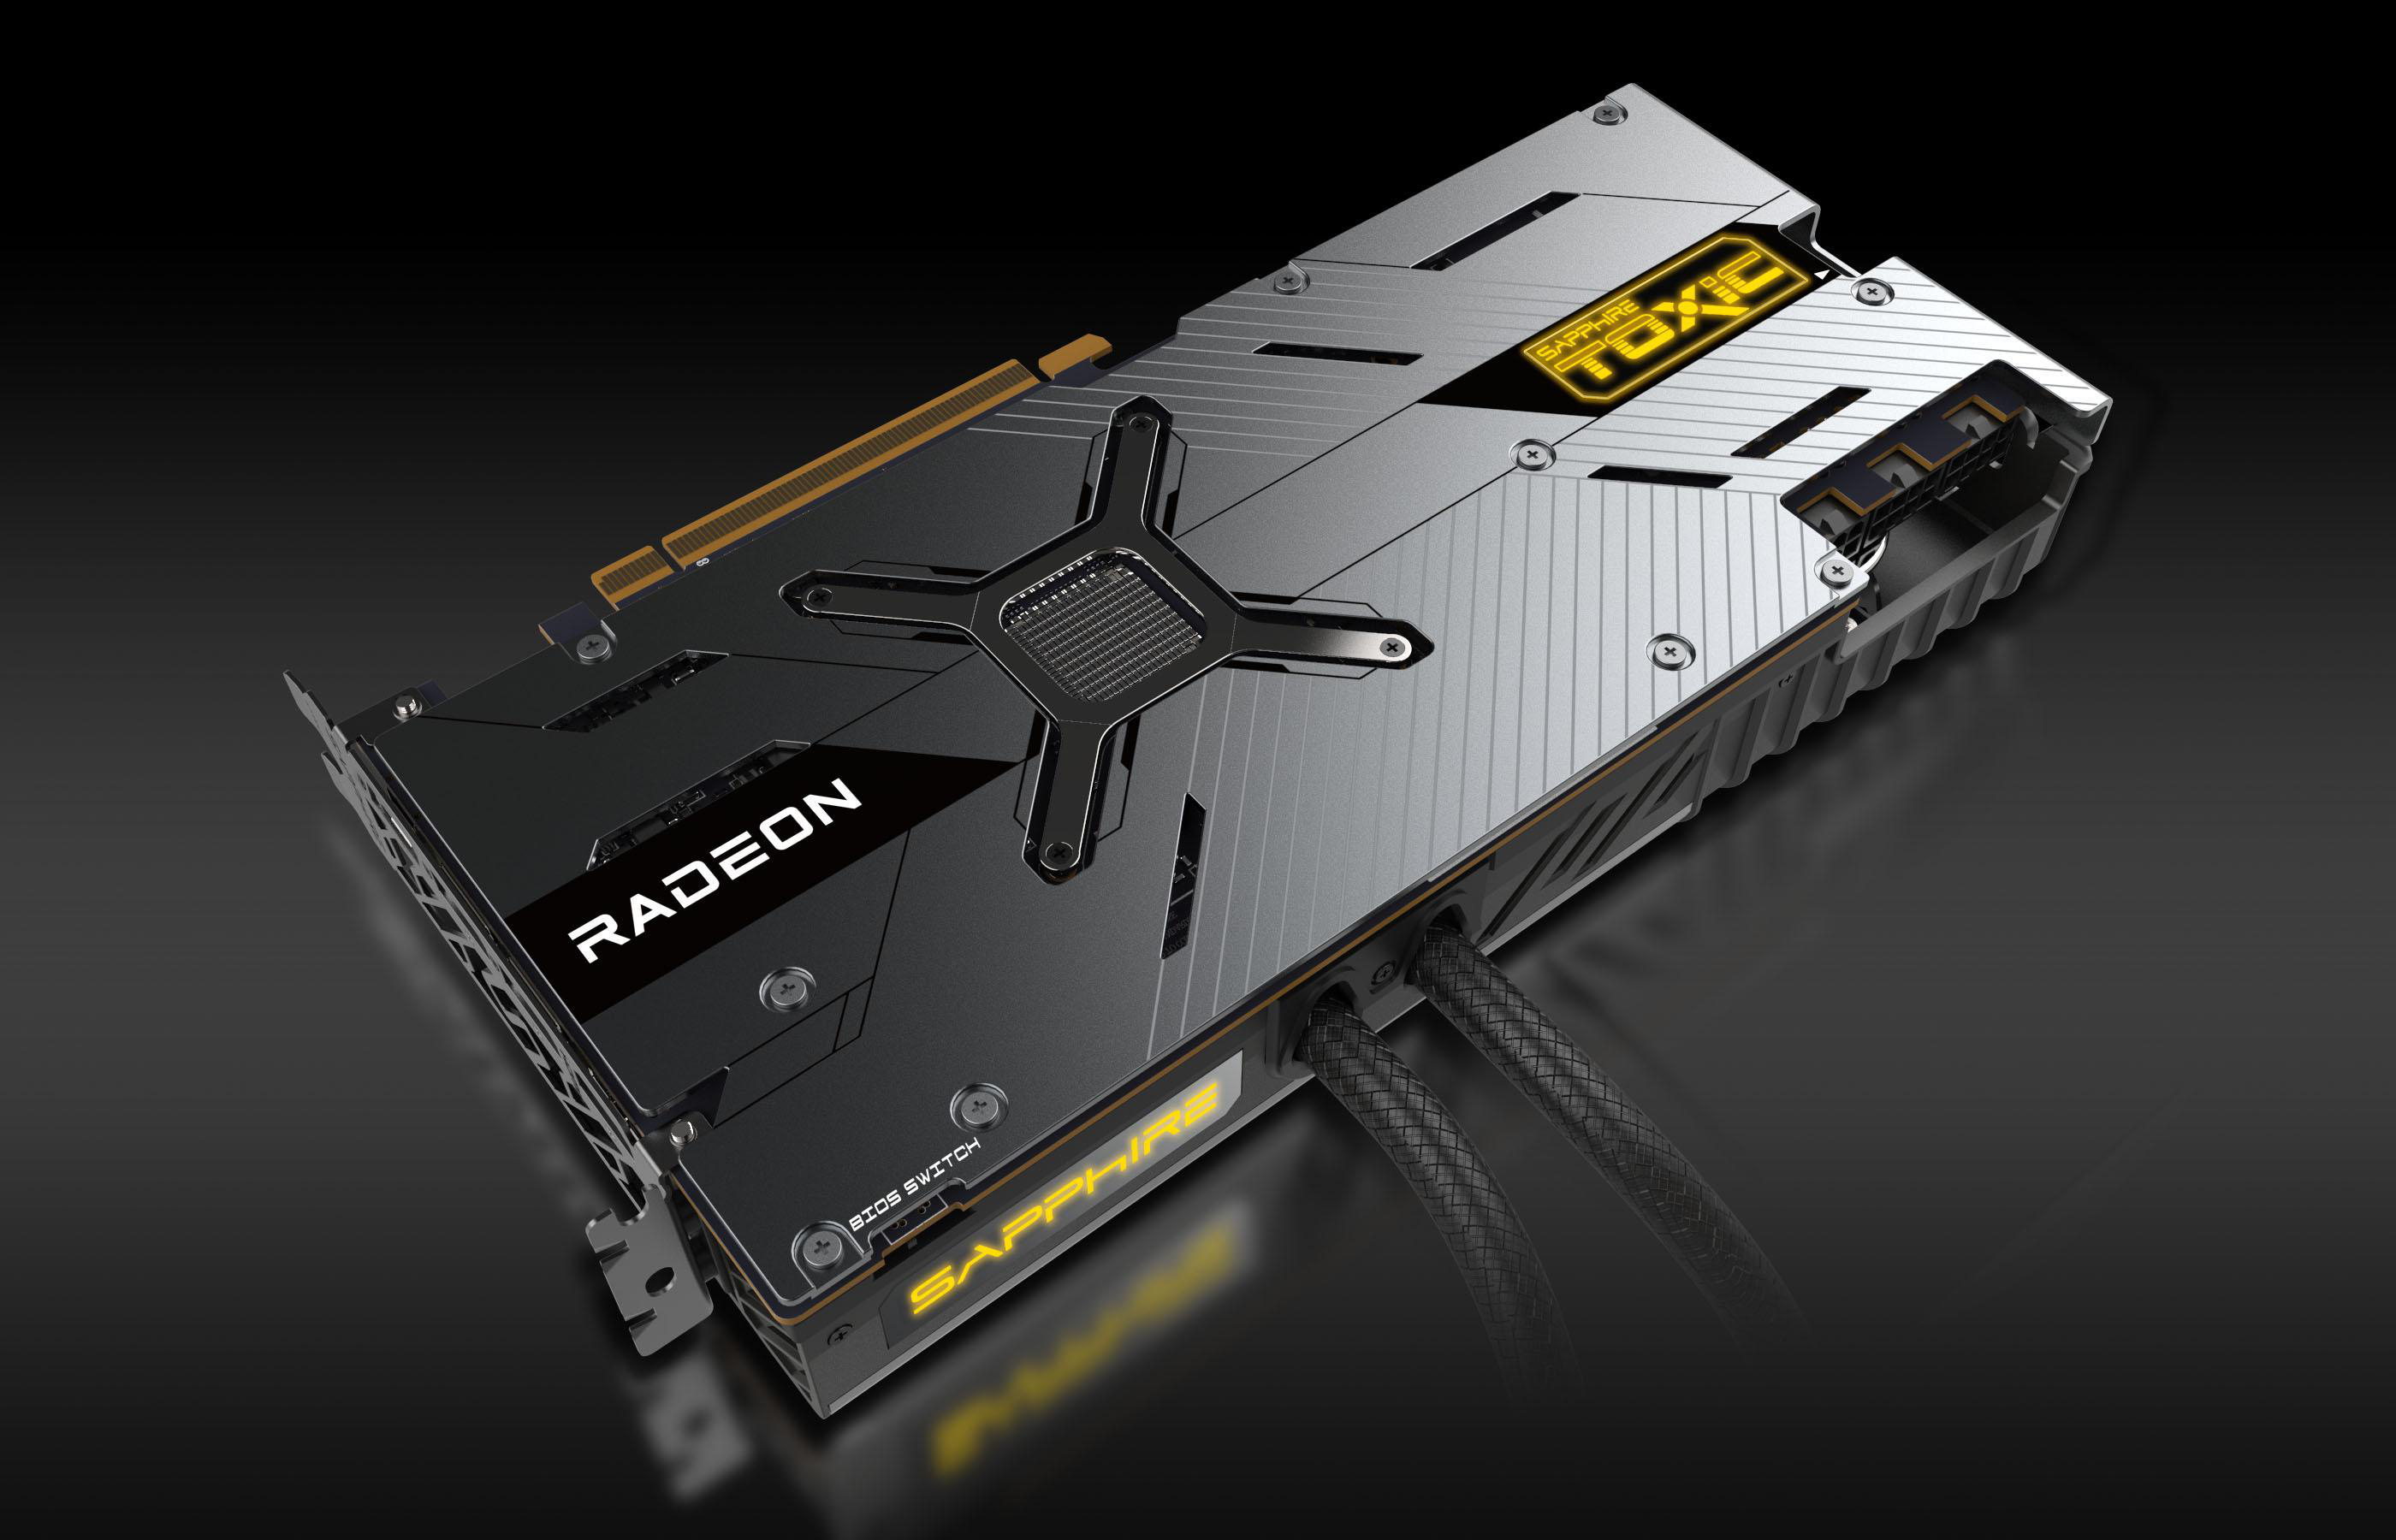 SAPPHIRE Radeon RX 6900 16GB (11308-06-20G) (AMD, Edition Toxic XT OC Limited Gaming Grafikkarte)